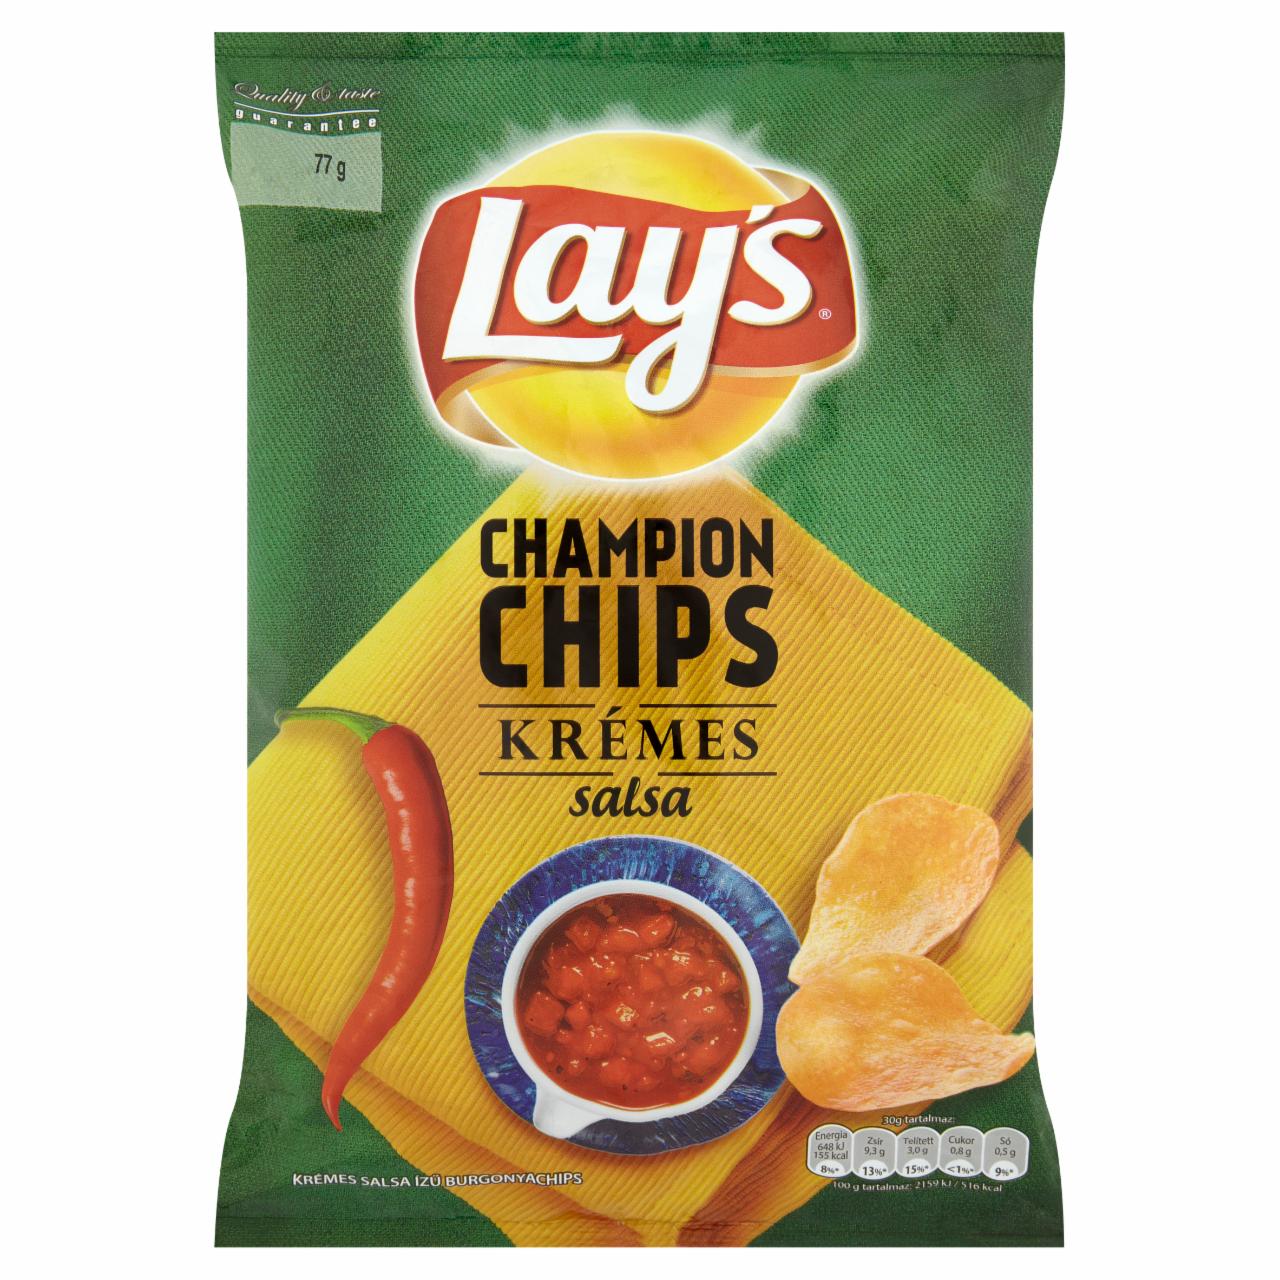 Képek - Lay's Champion Chips krémes salsa ízű burgonyachips 77 g